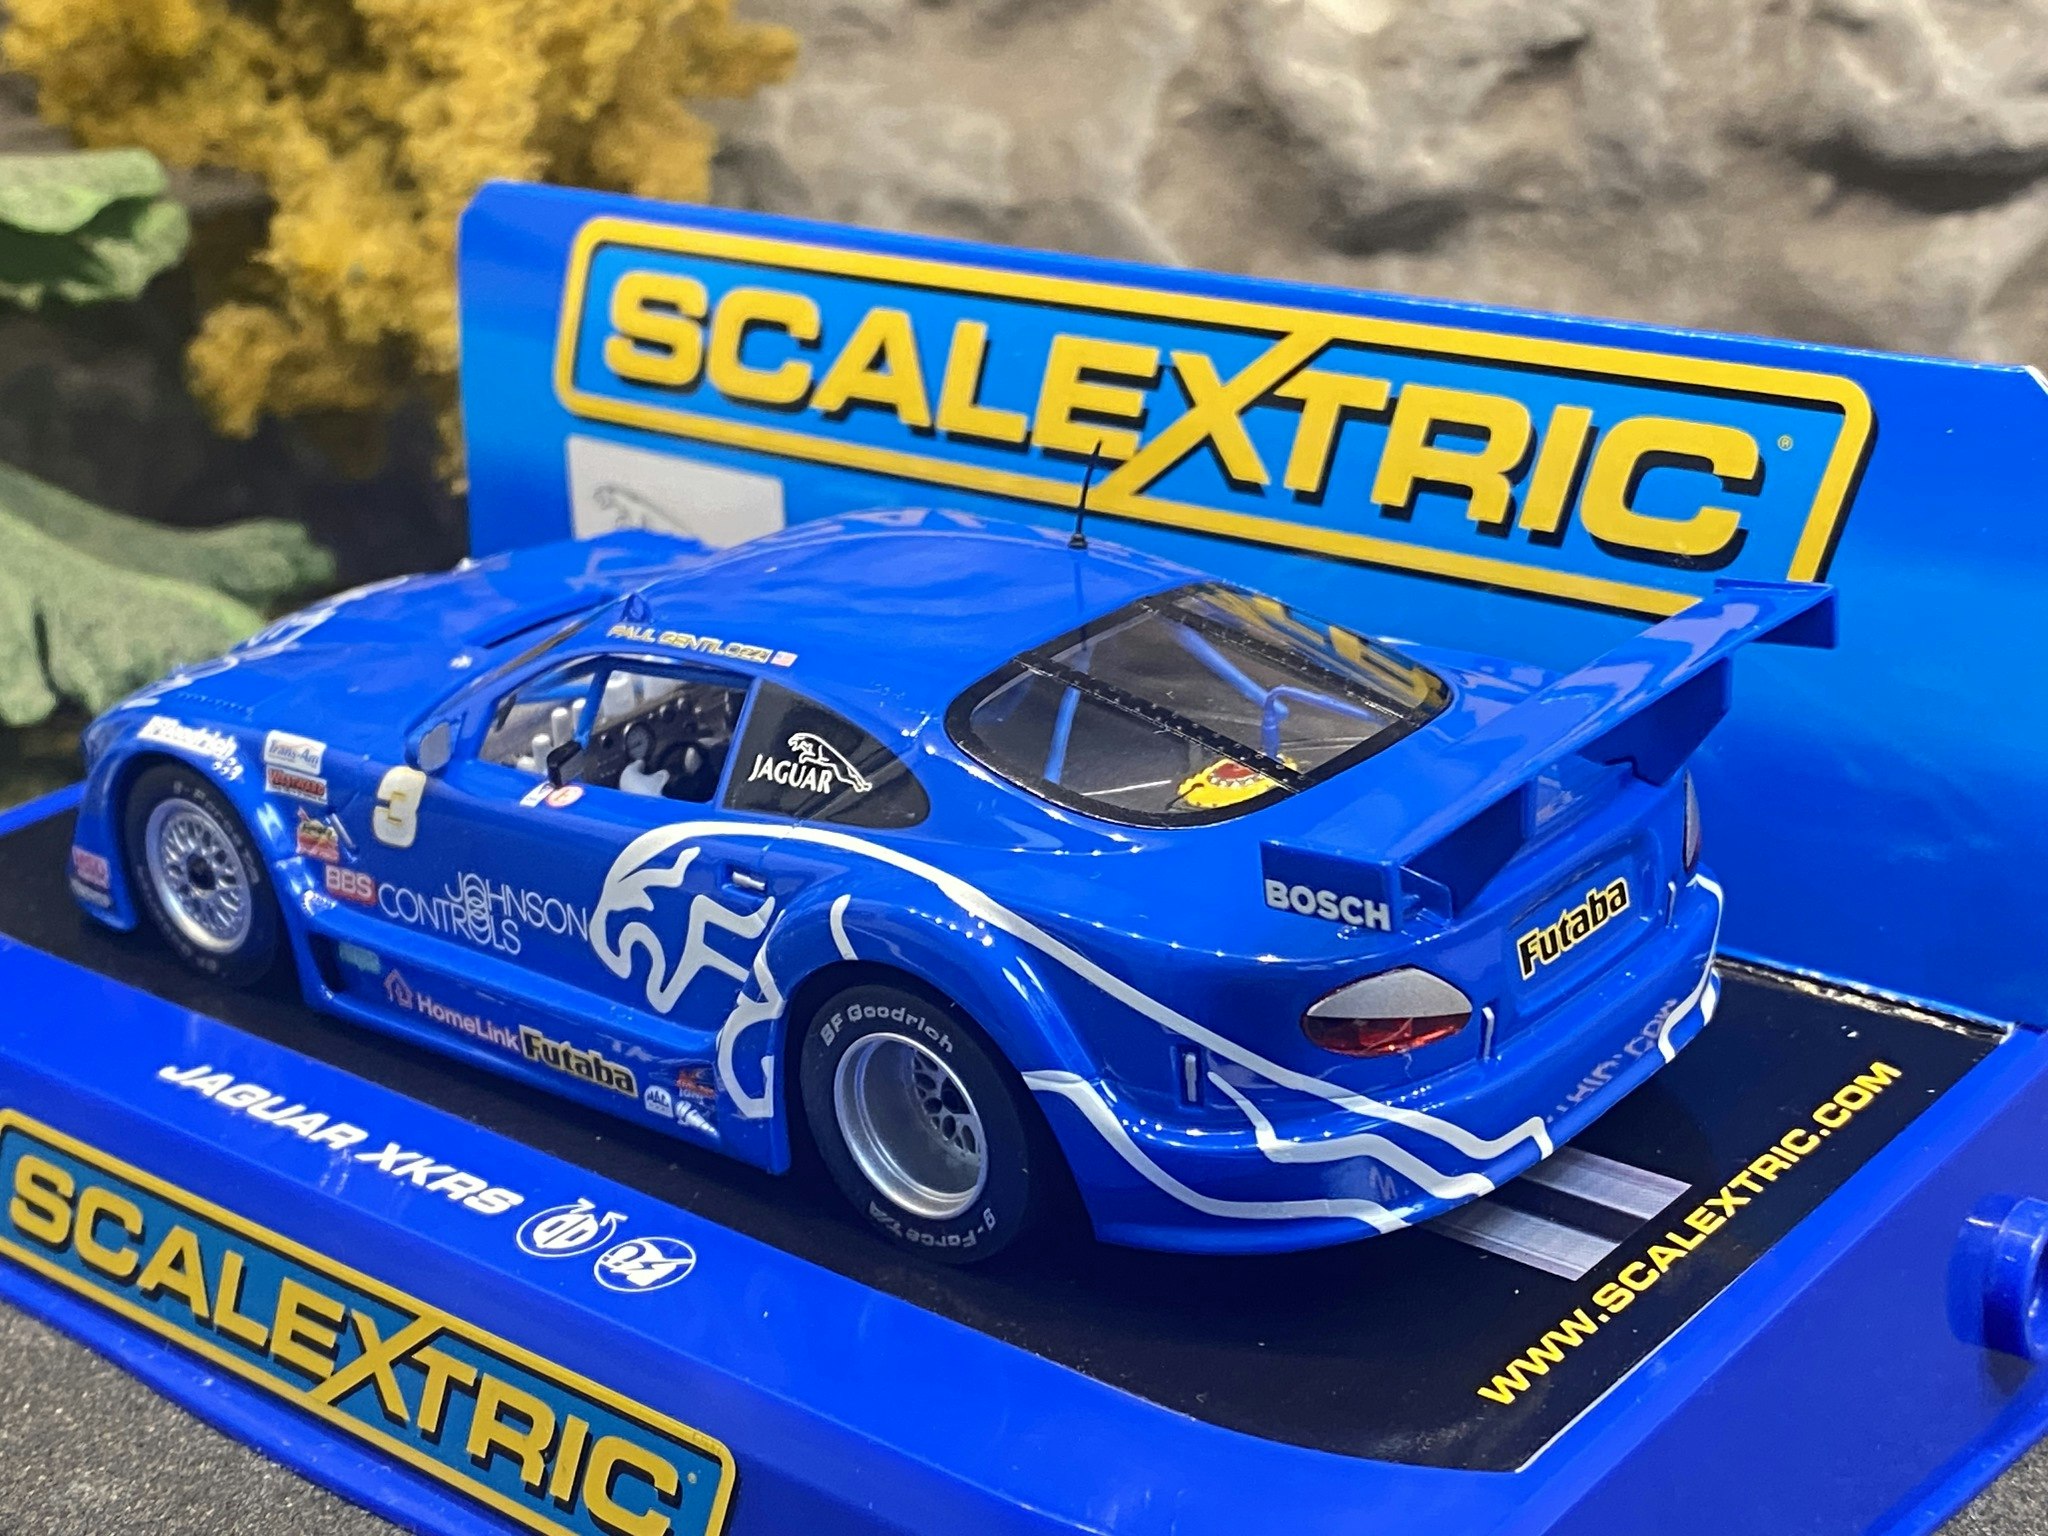 Scale 1/32 Analogue Slotcar - Jaguar XKRS, "Rocket Motorsports" blue fr Scalextric